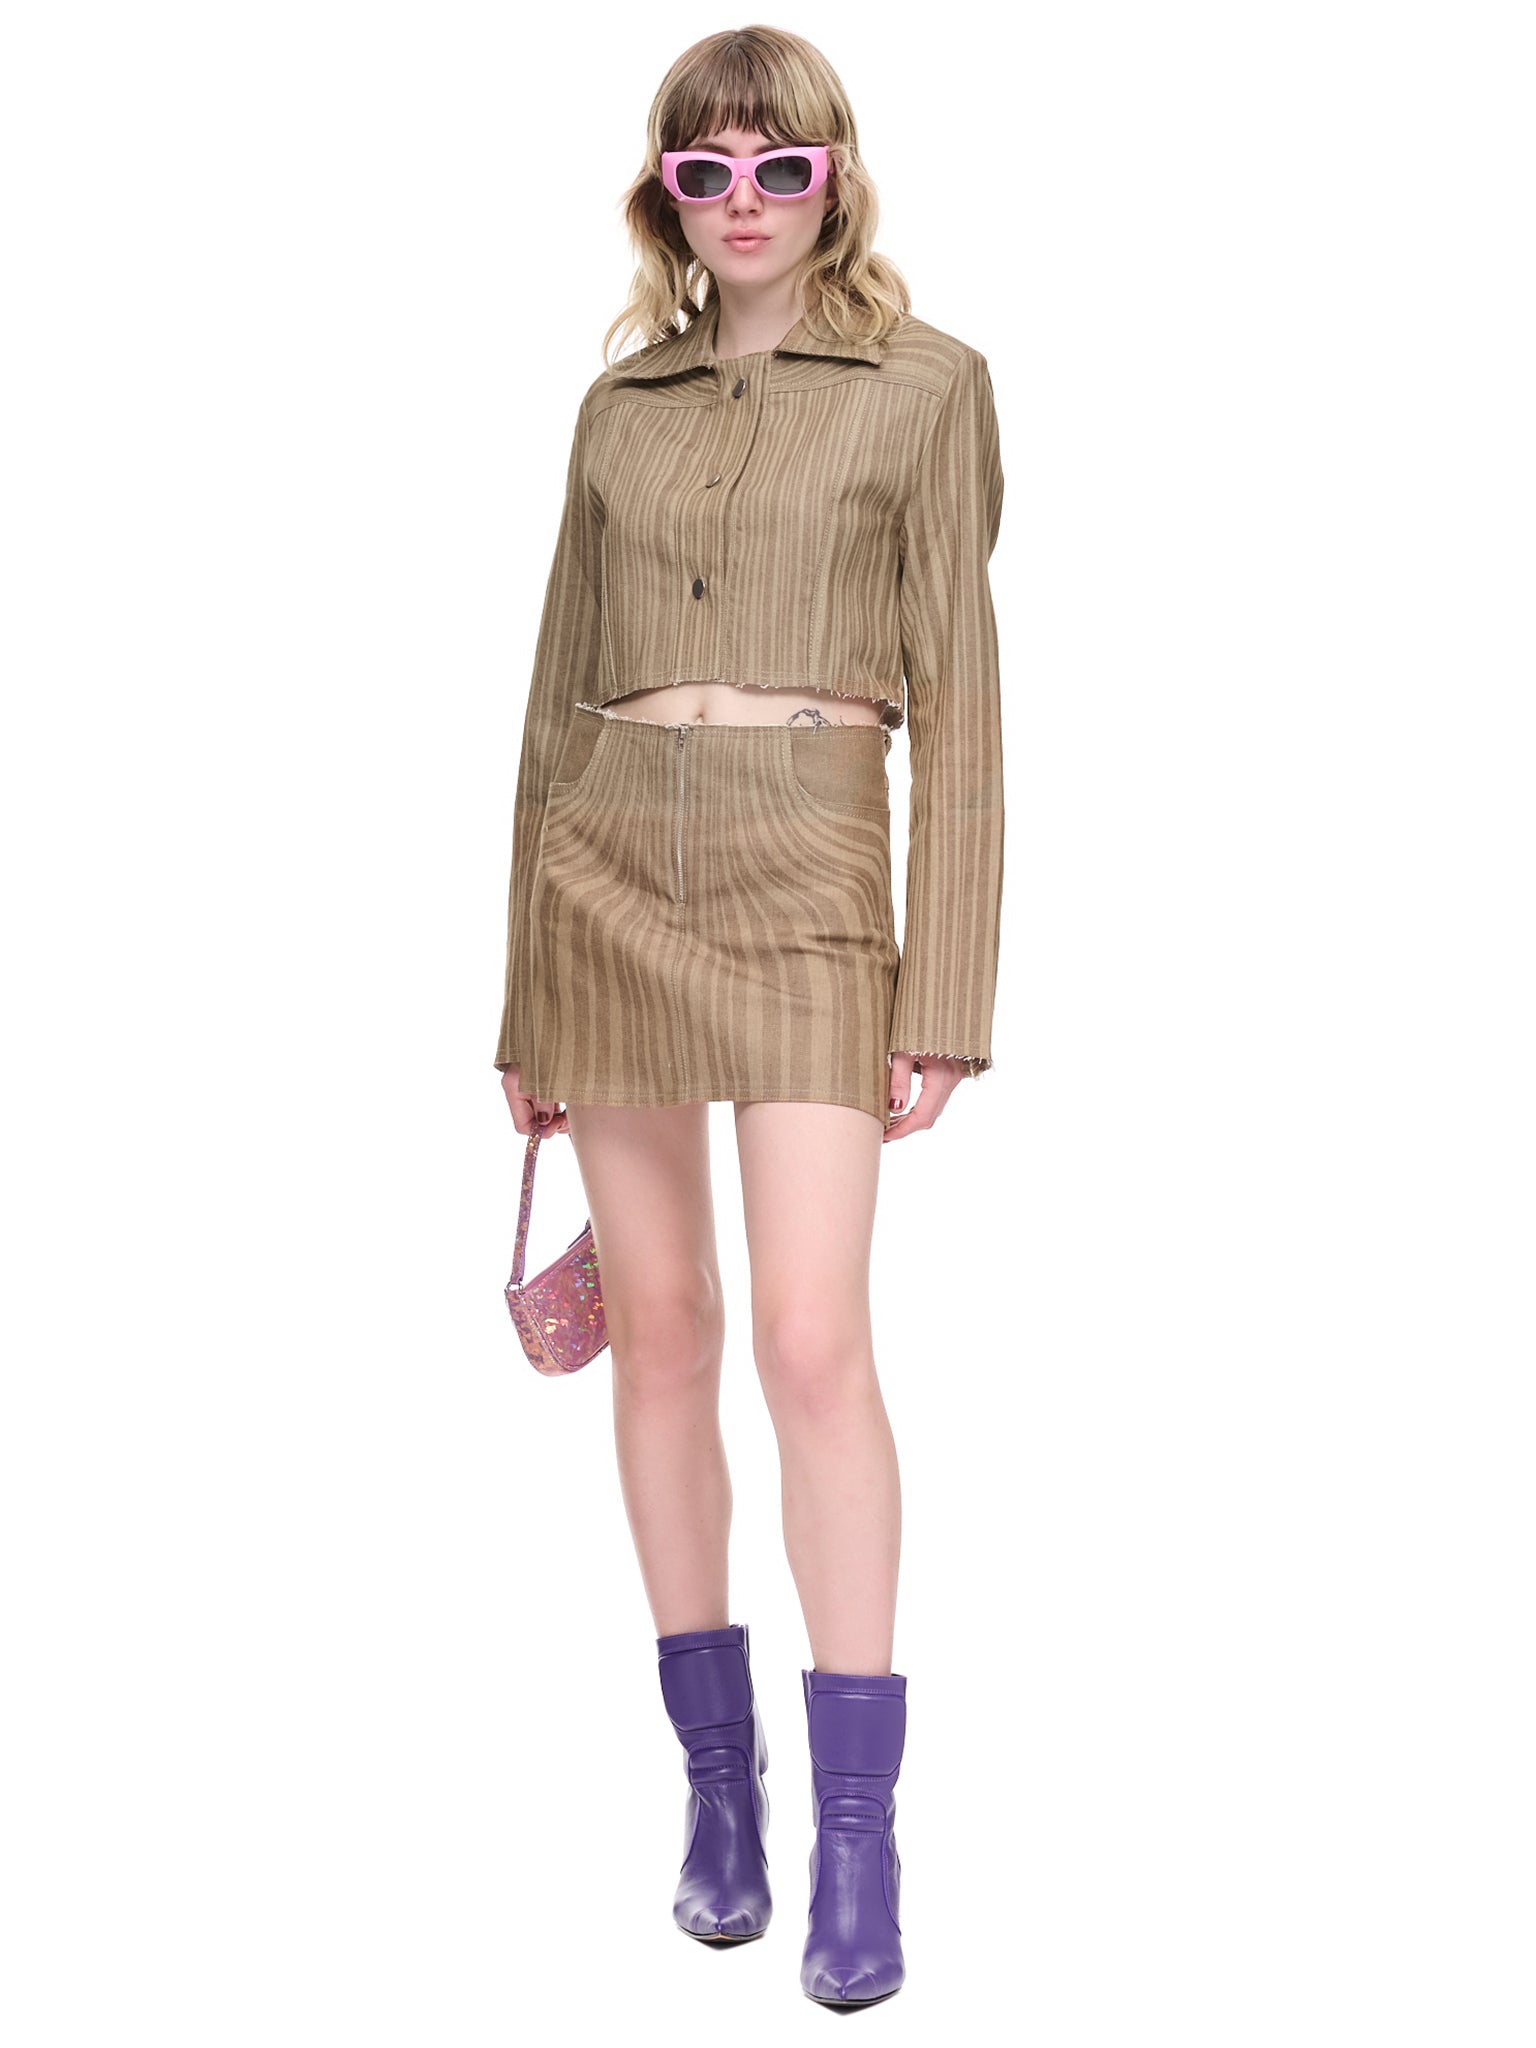 Lazered Denim Mini Skirt (DE3-BR-BROWN-DENIM)